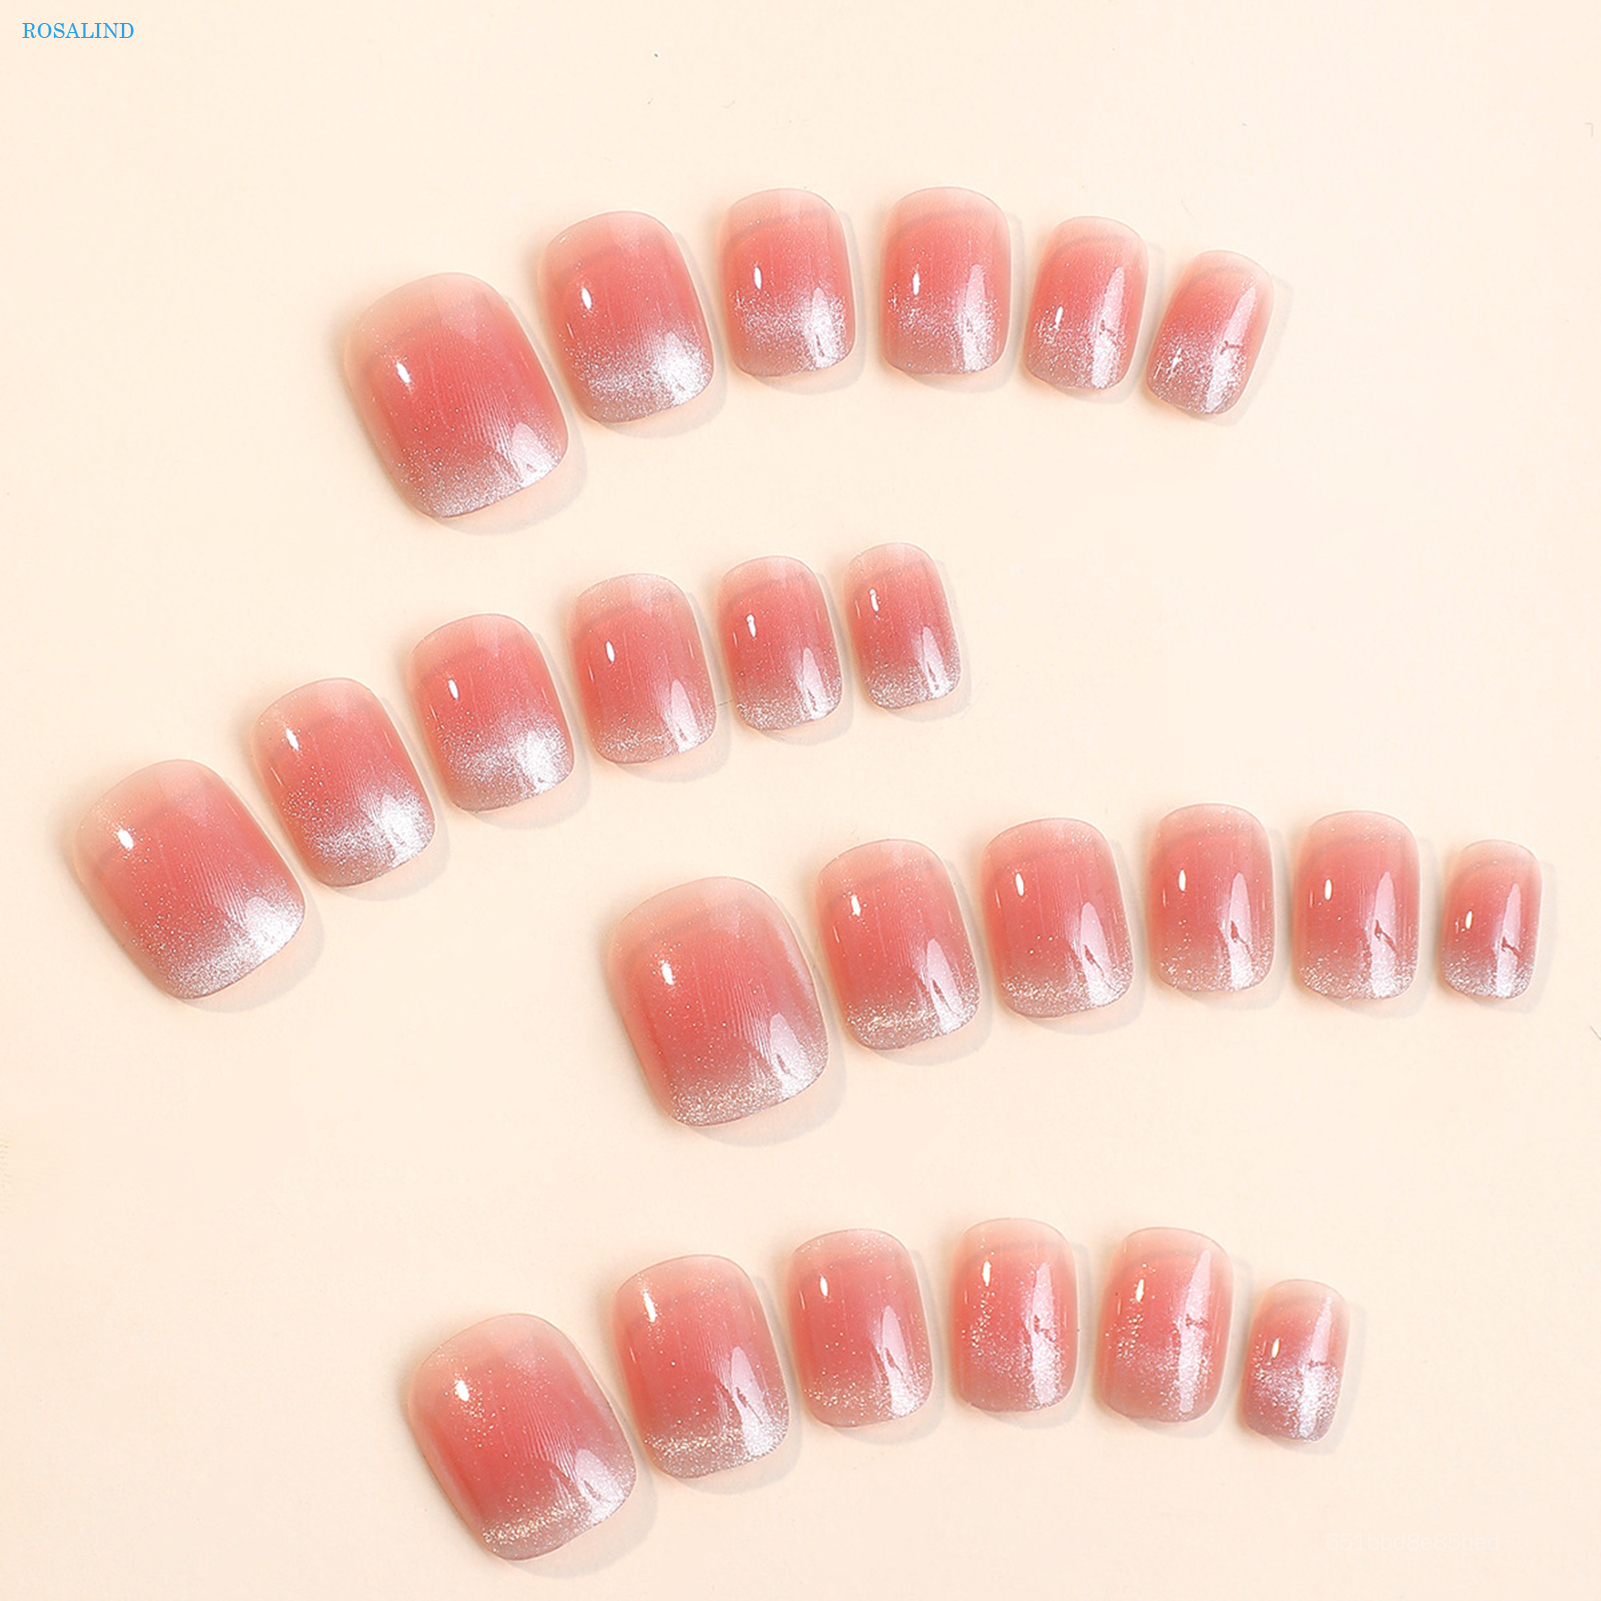 Rosalind Pink Translucent Shiny False Nails Popular Durable Press